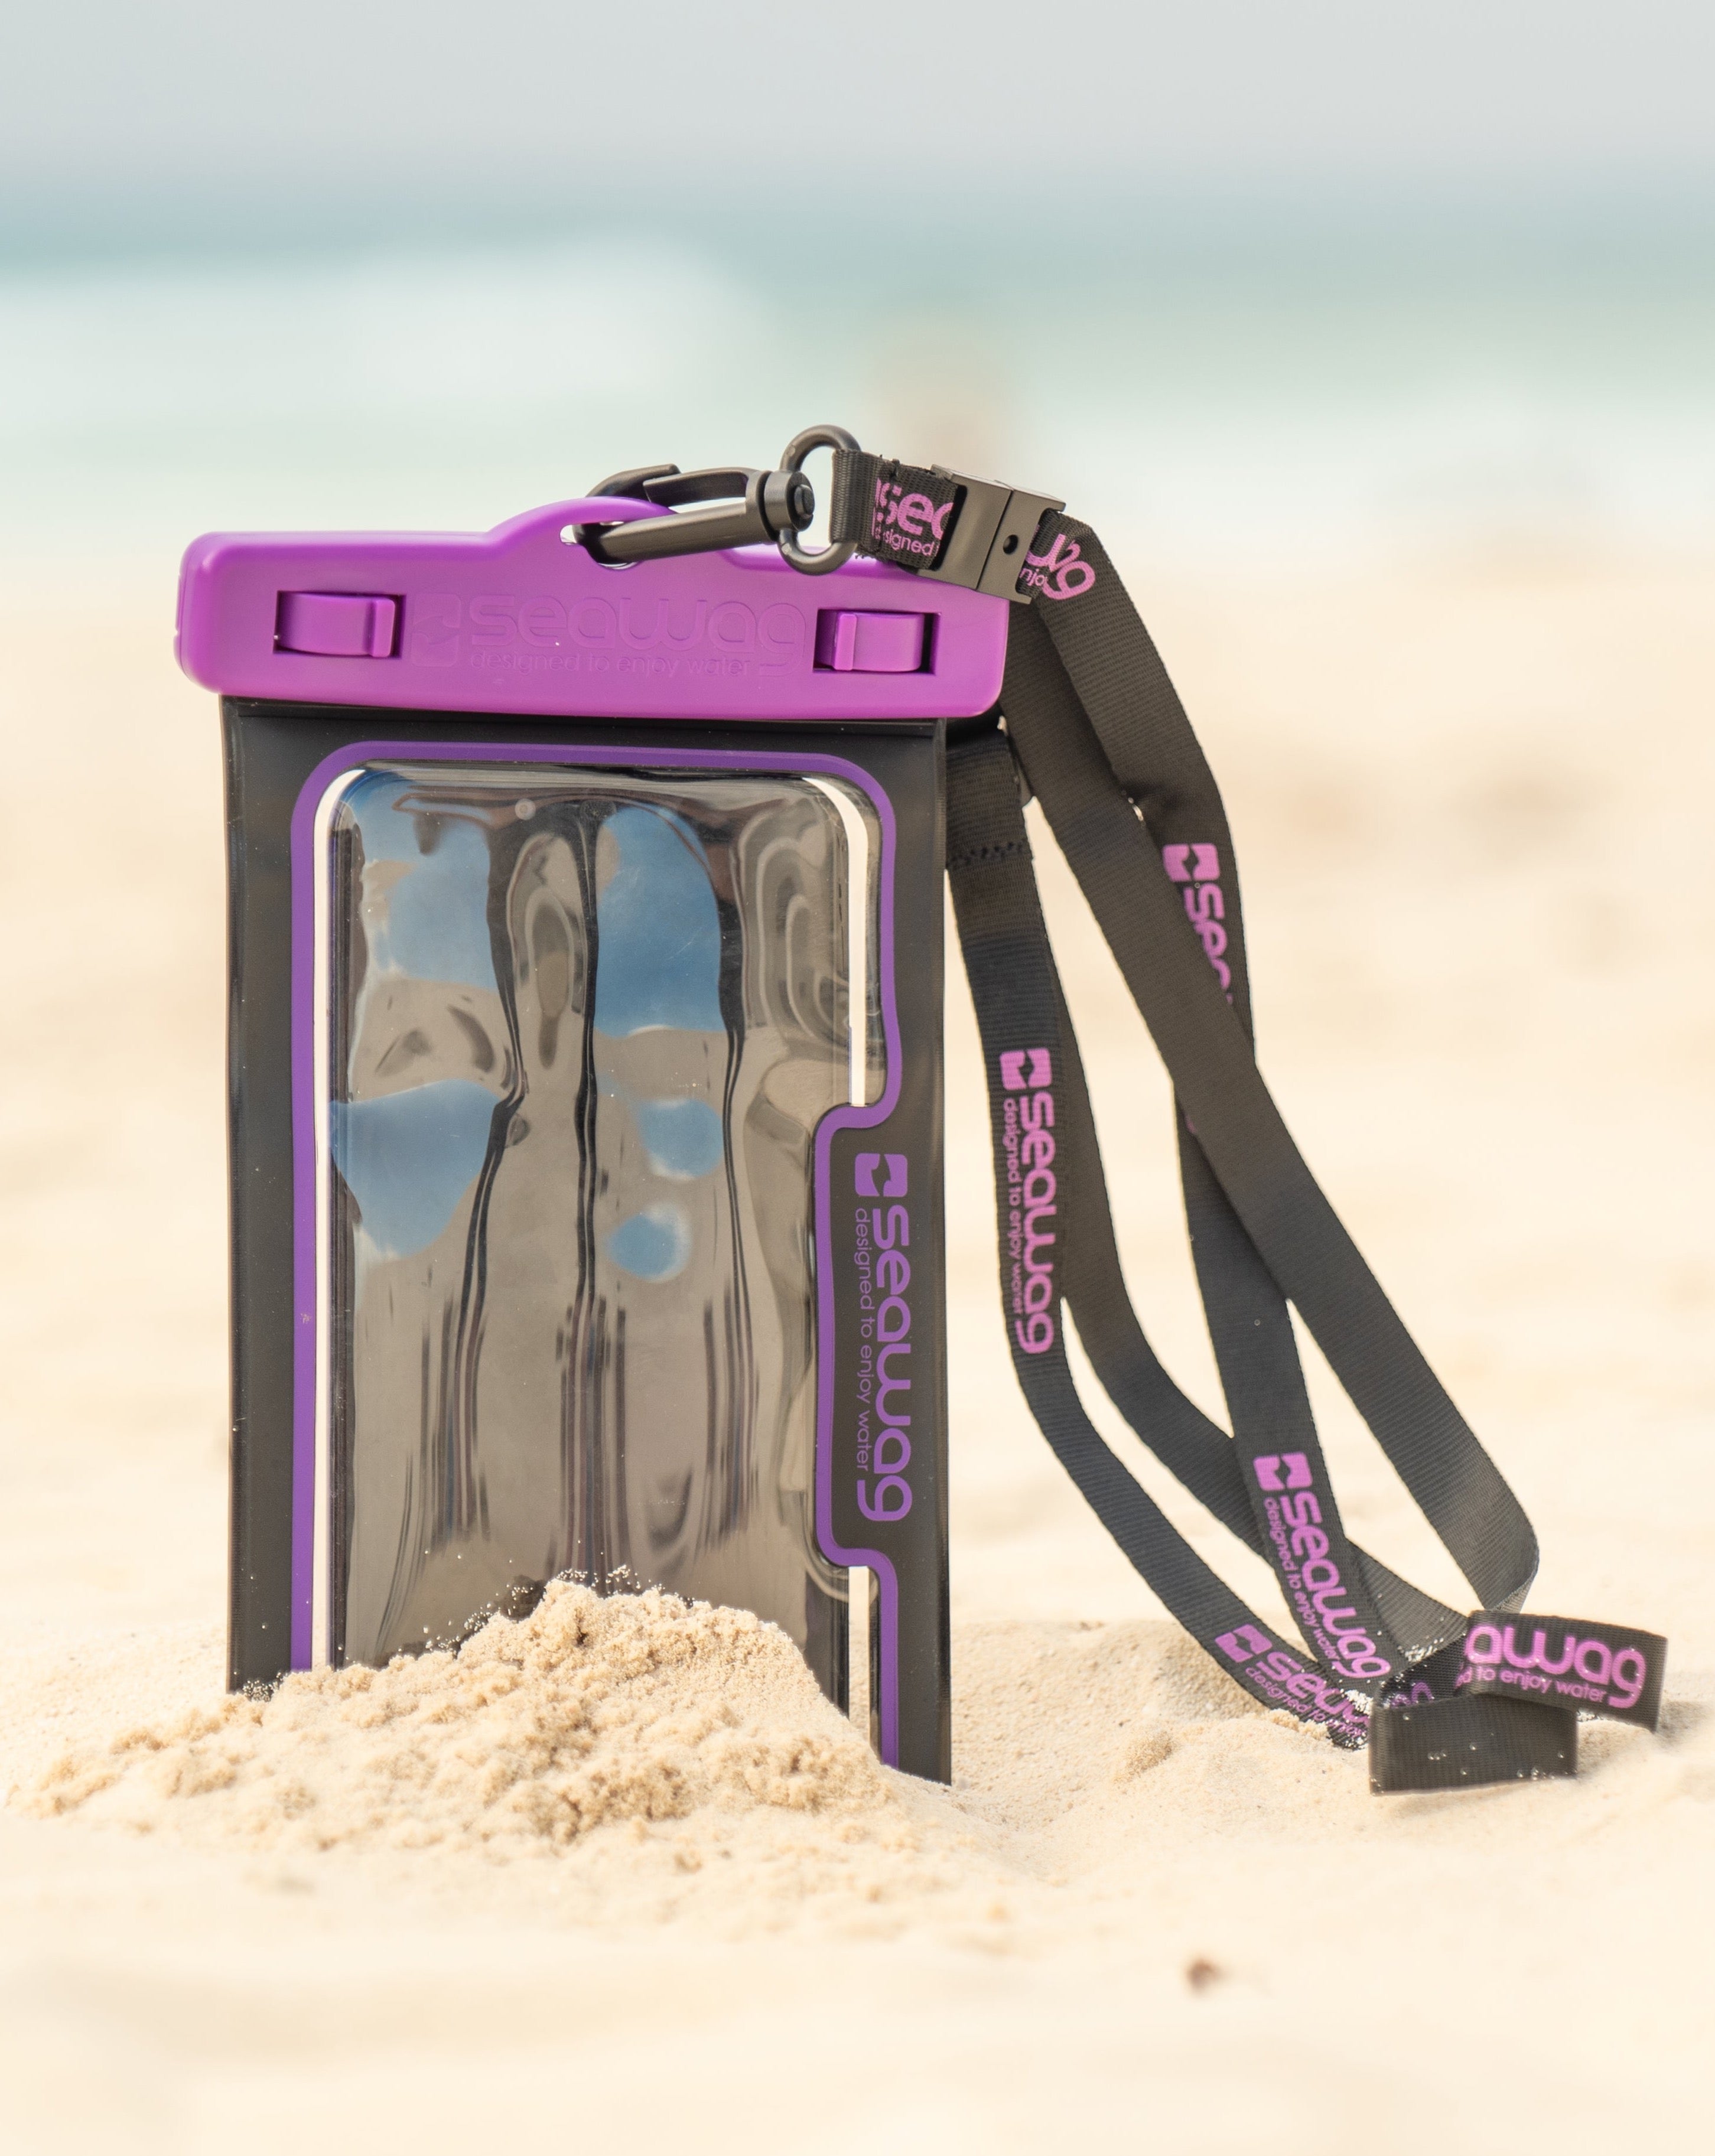 Universal Waterproof Case For Smartphone - Black/Purple